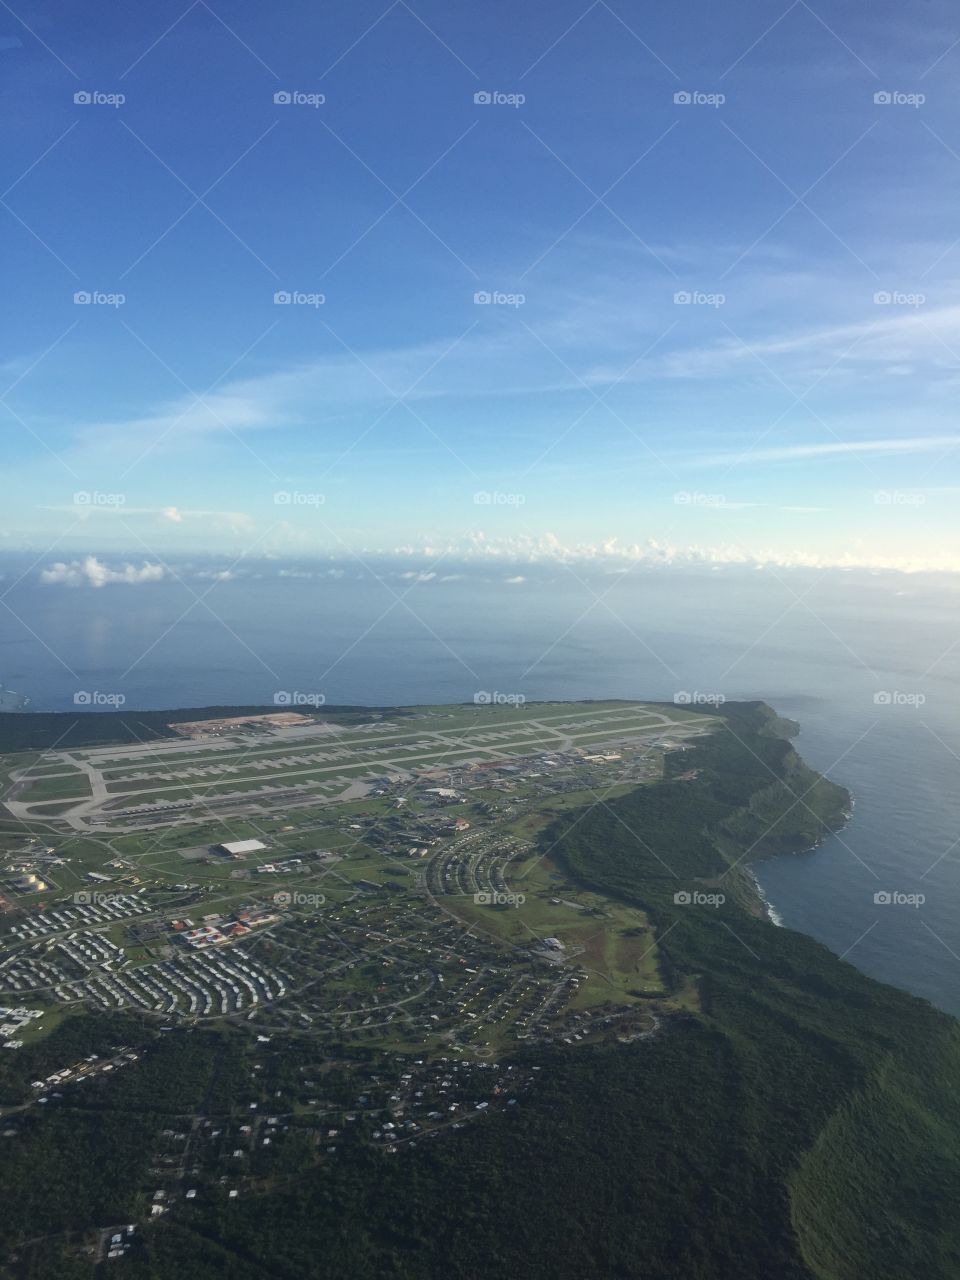 Aerial view of Guam